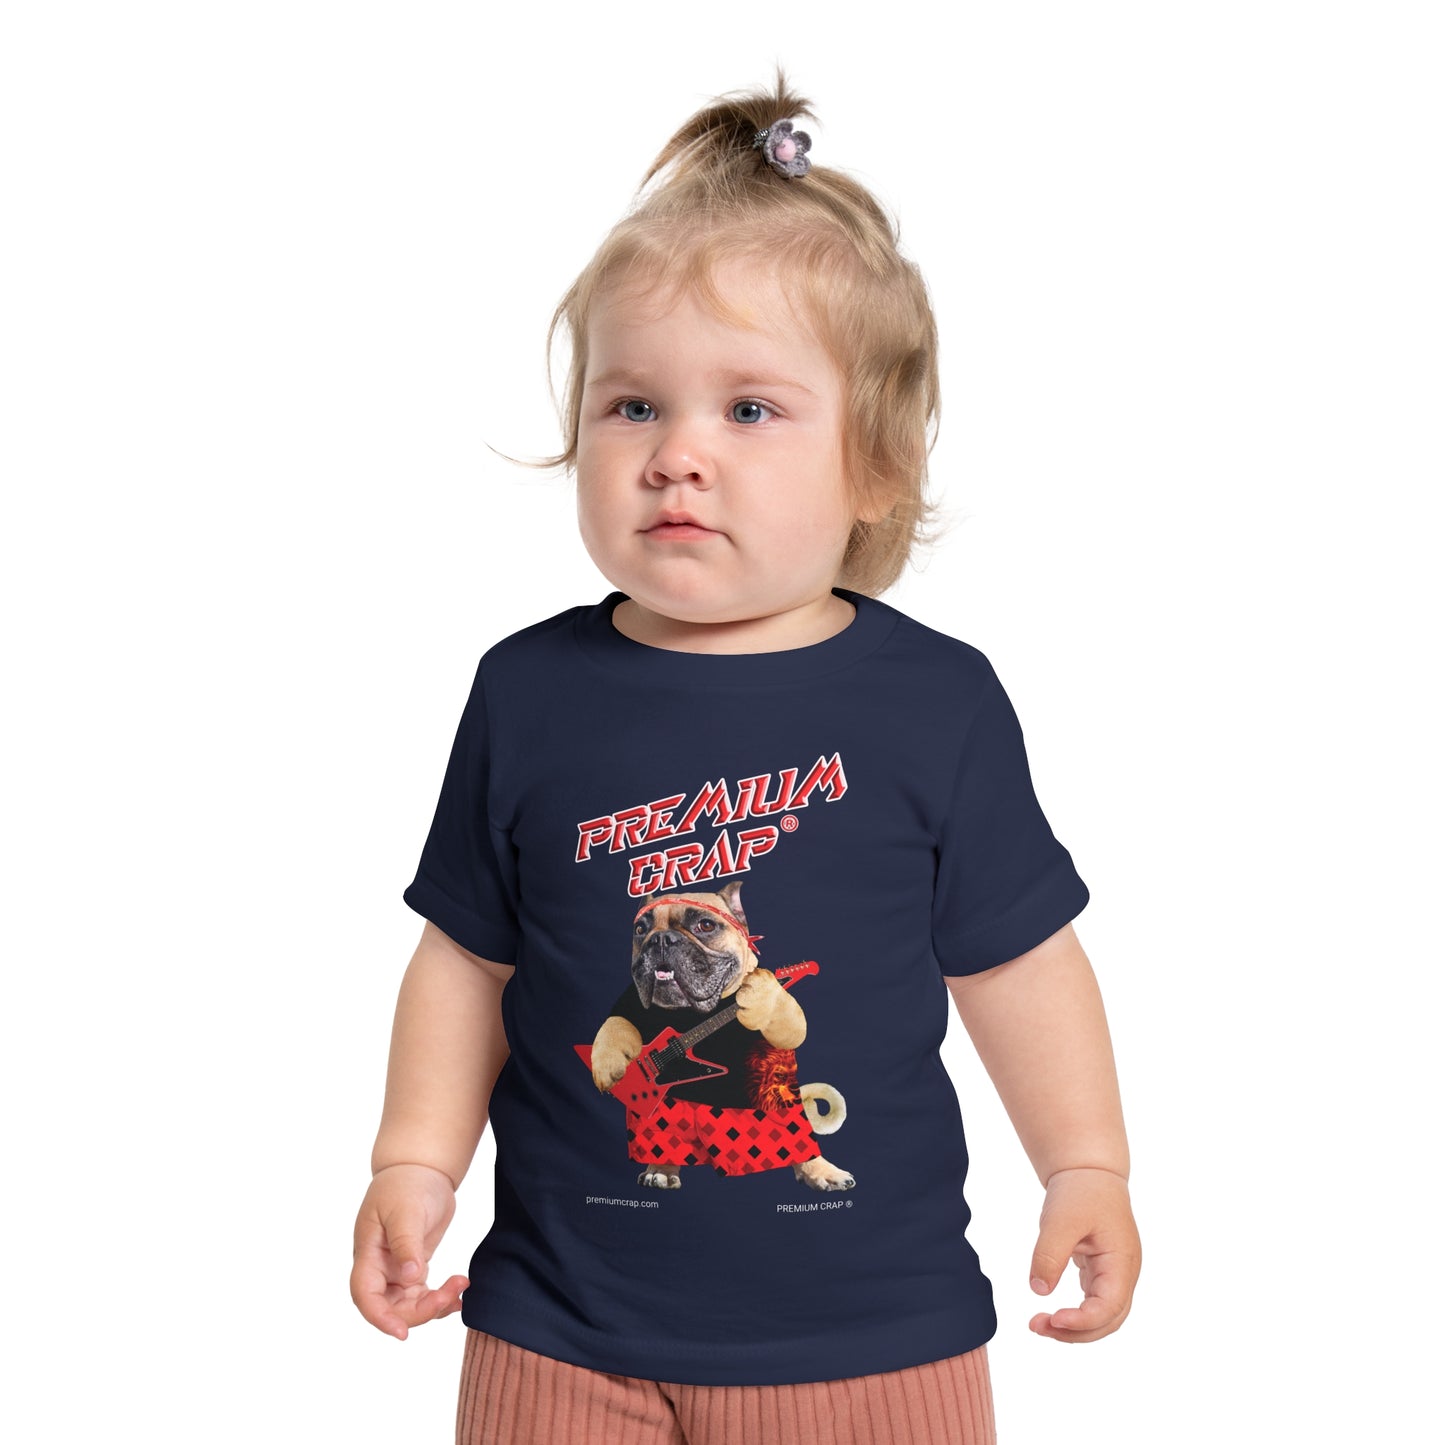 Premium Crap II Baby Short Sleeve T-Shirt